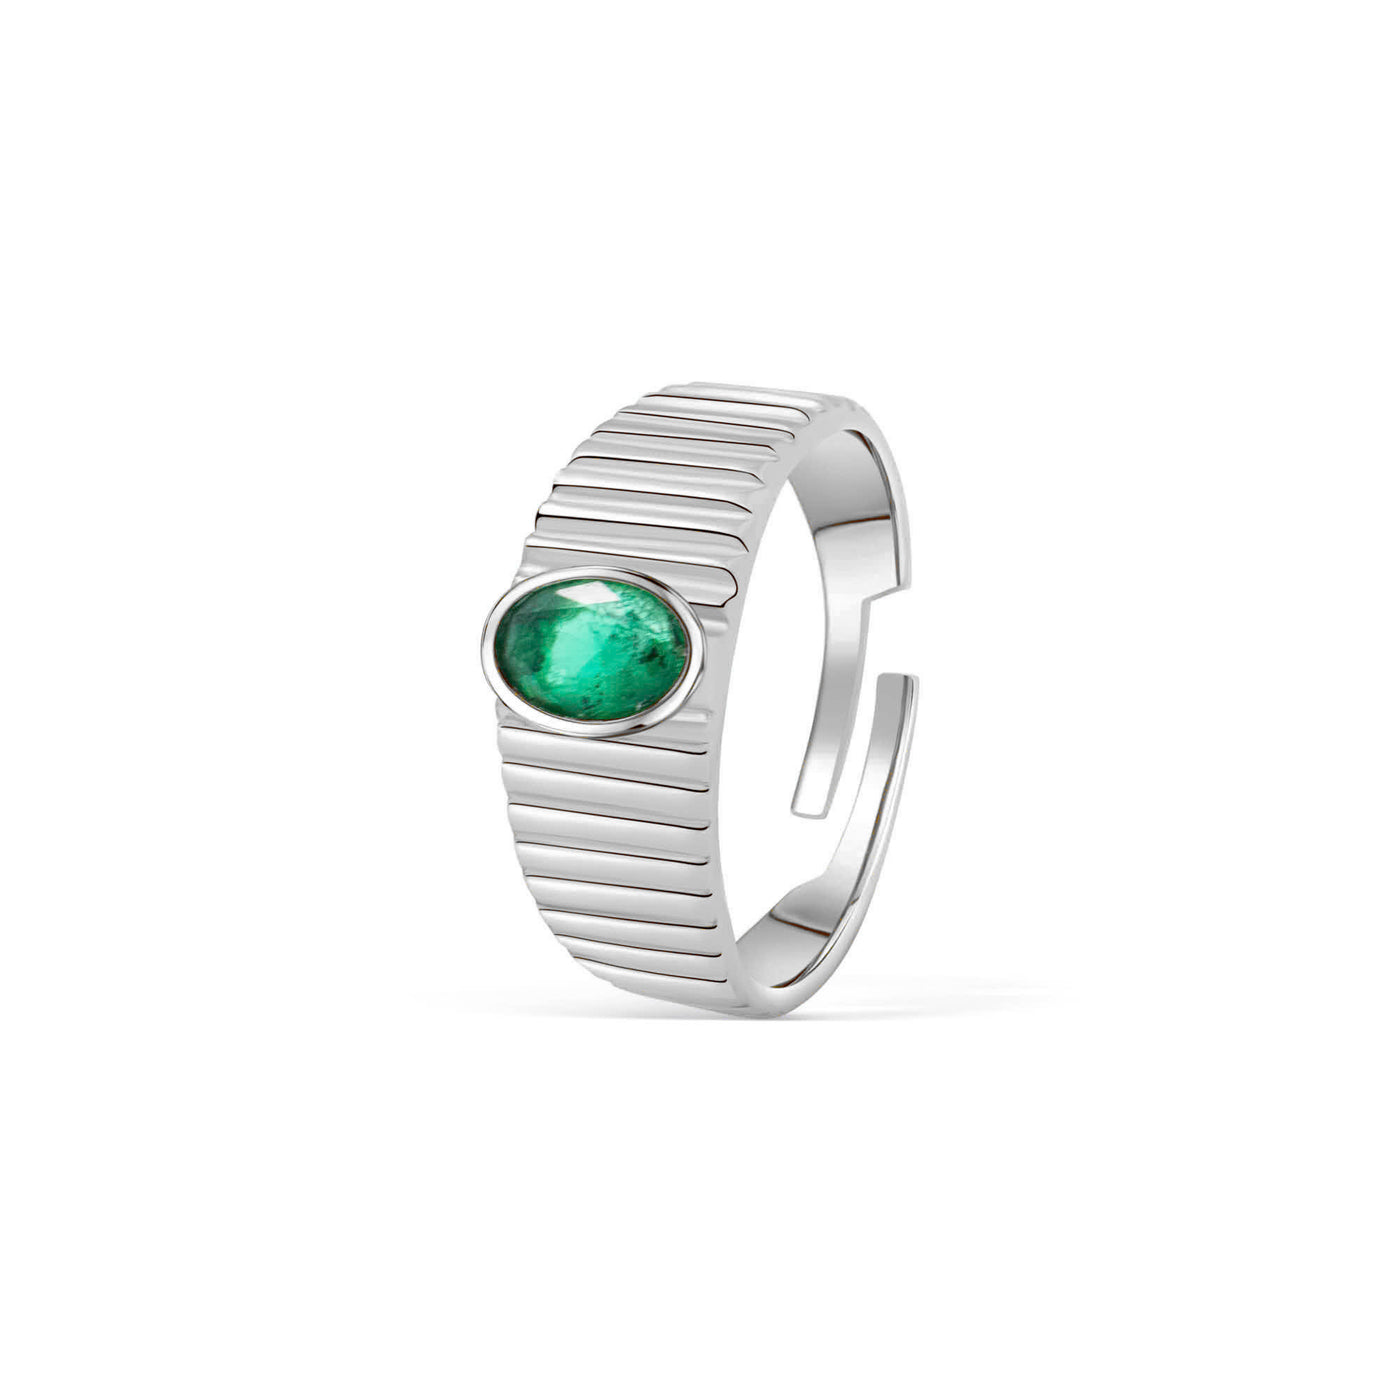 CZ Emerald Ring